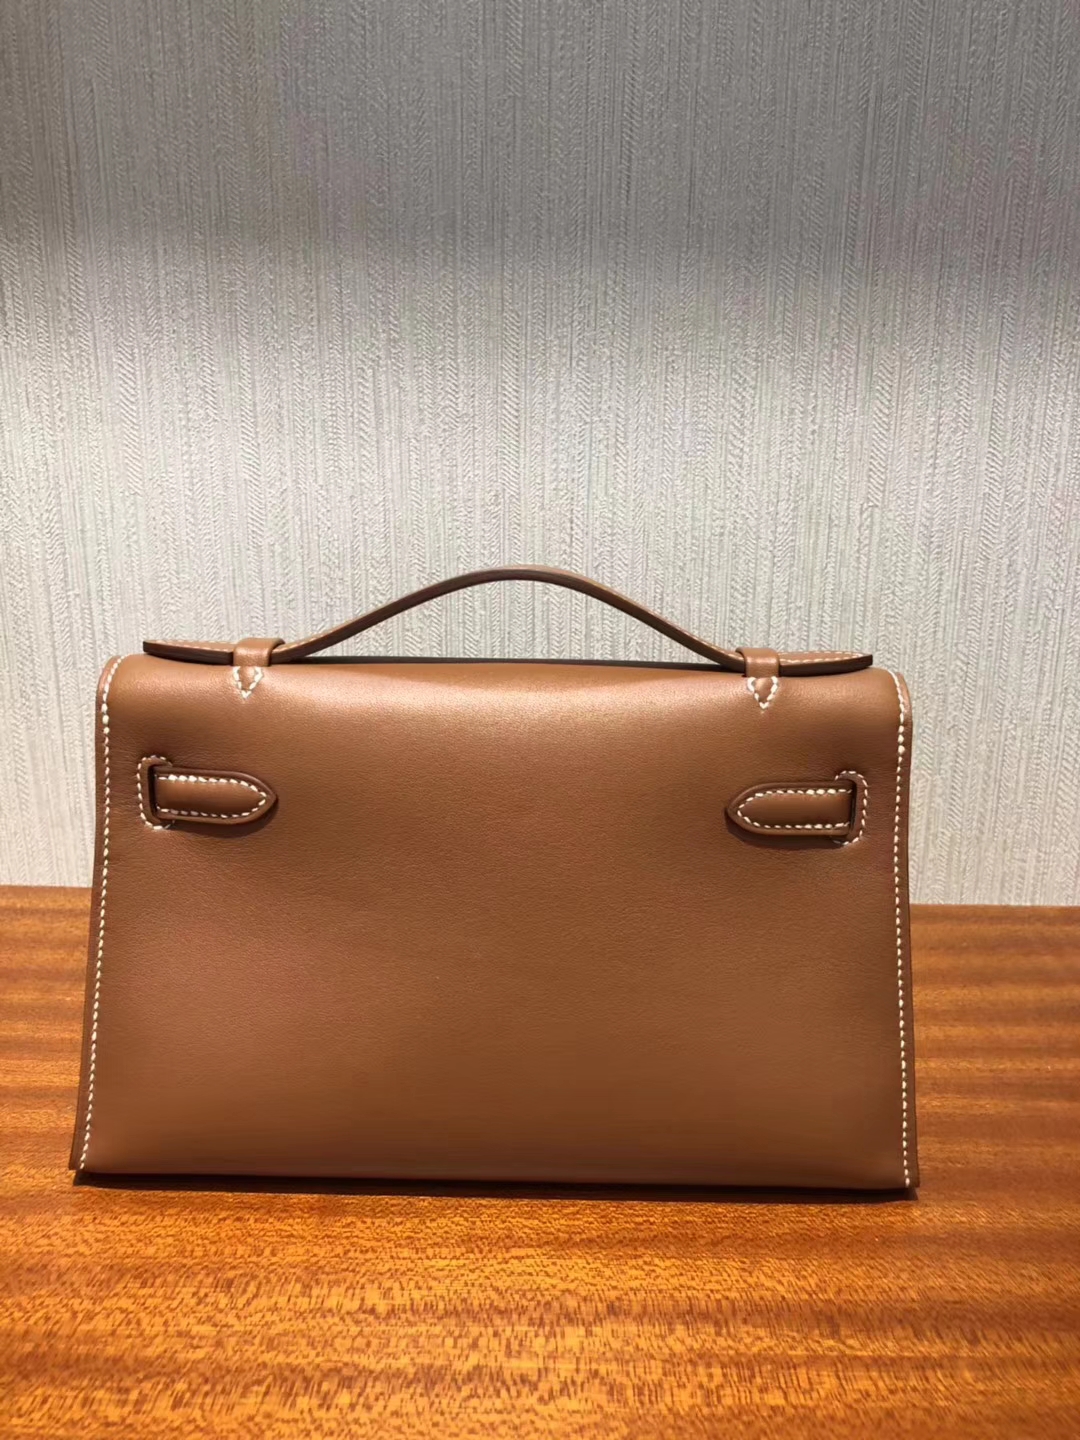 Elegant Hermes Swift Calfskin Leather Minikelly Evening Clutch Bag22CM